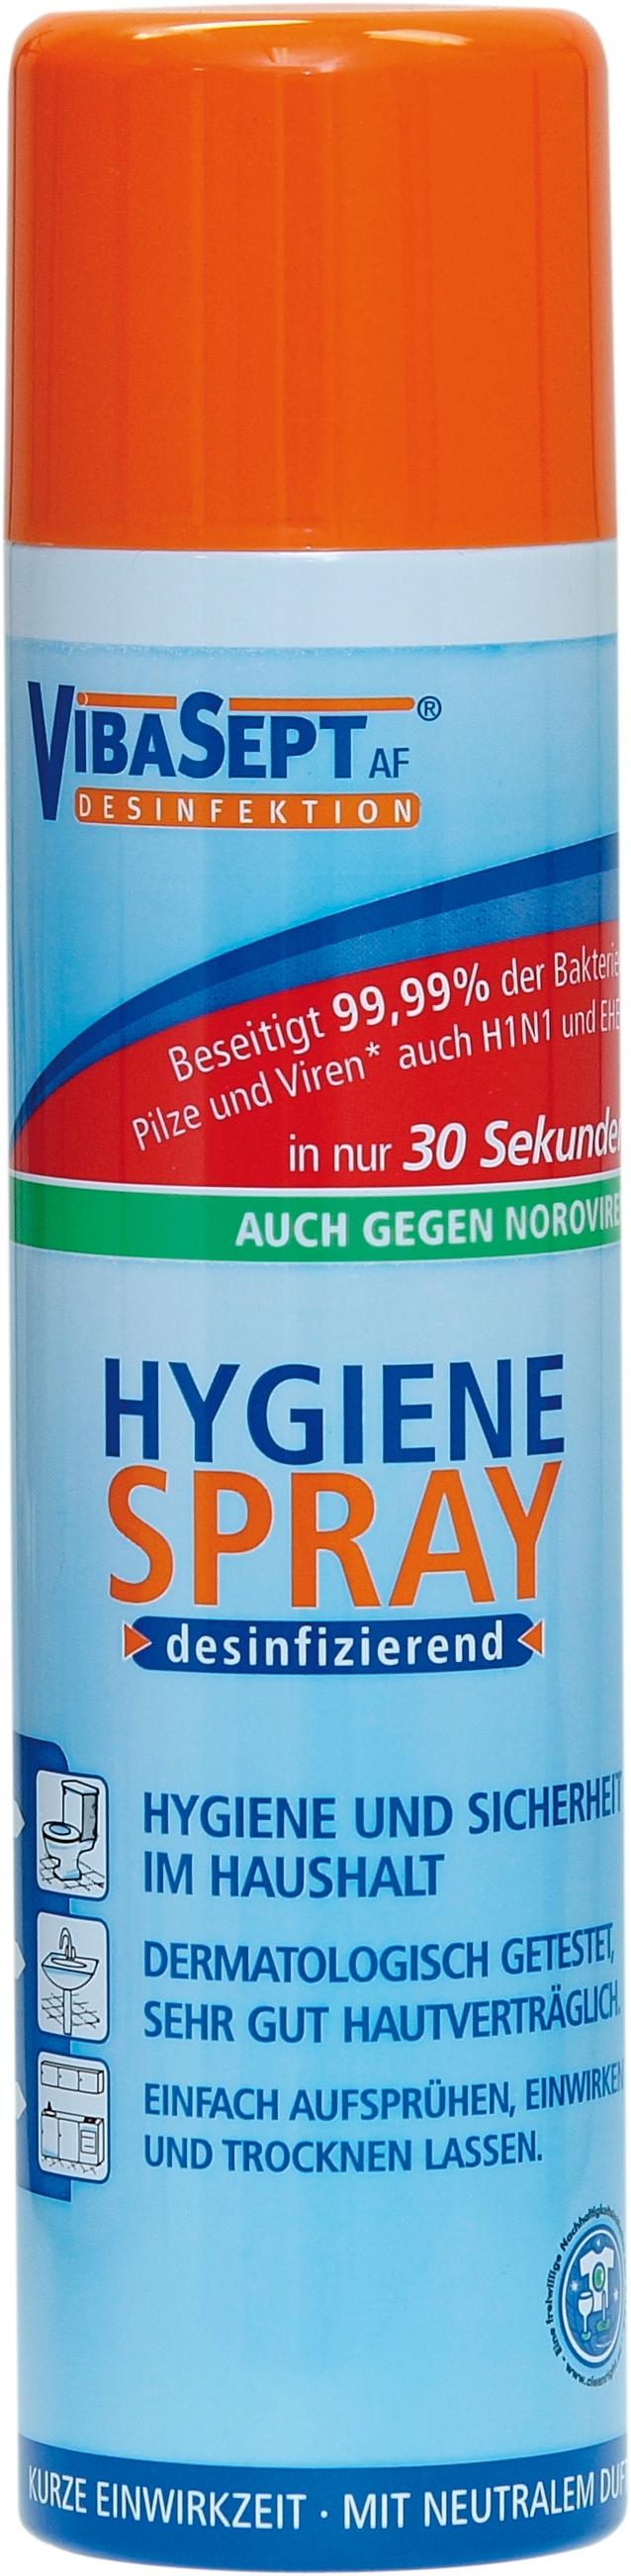 60060 - hygiene spray 400 ml